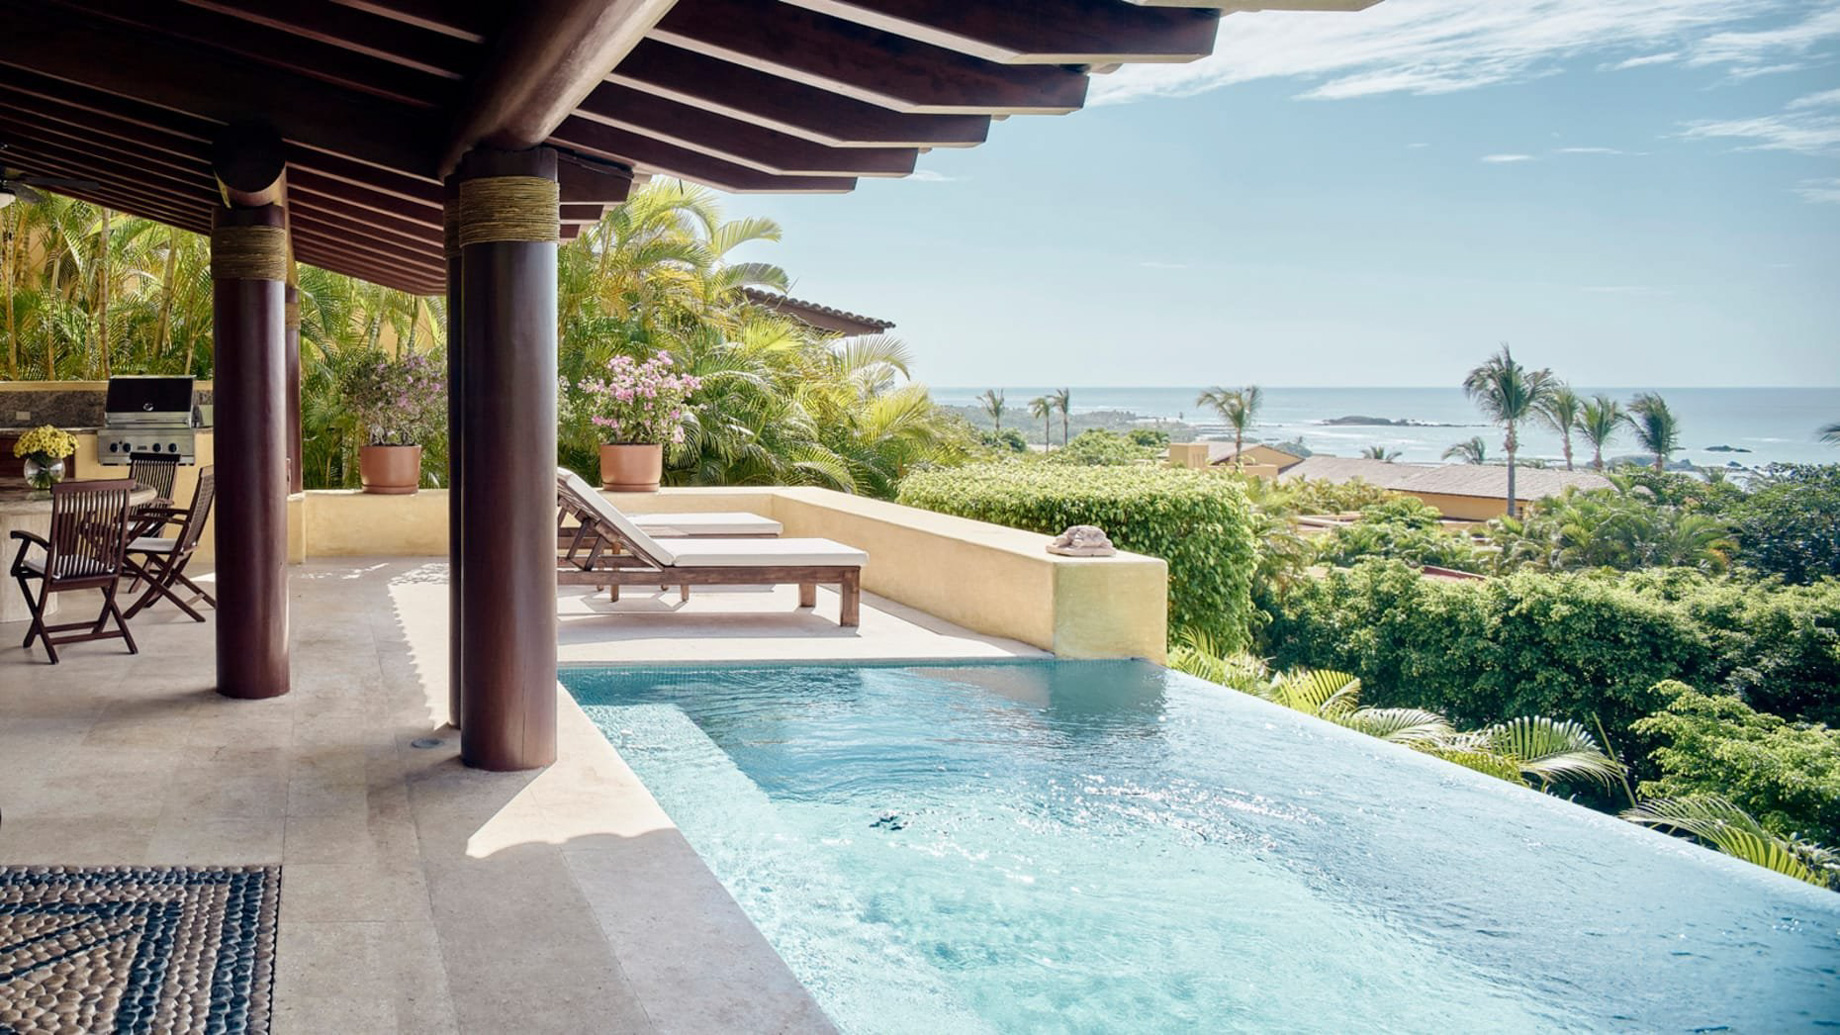 Four Seasons Resort Punta Mita – Nayarit, Mexico – Primavera Ocean View Villa Pool Deck